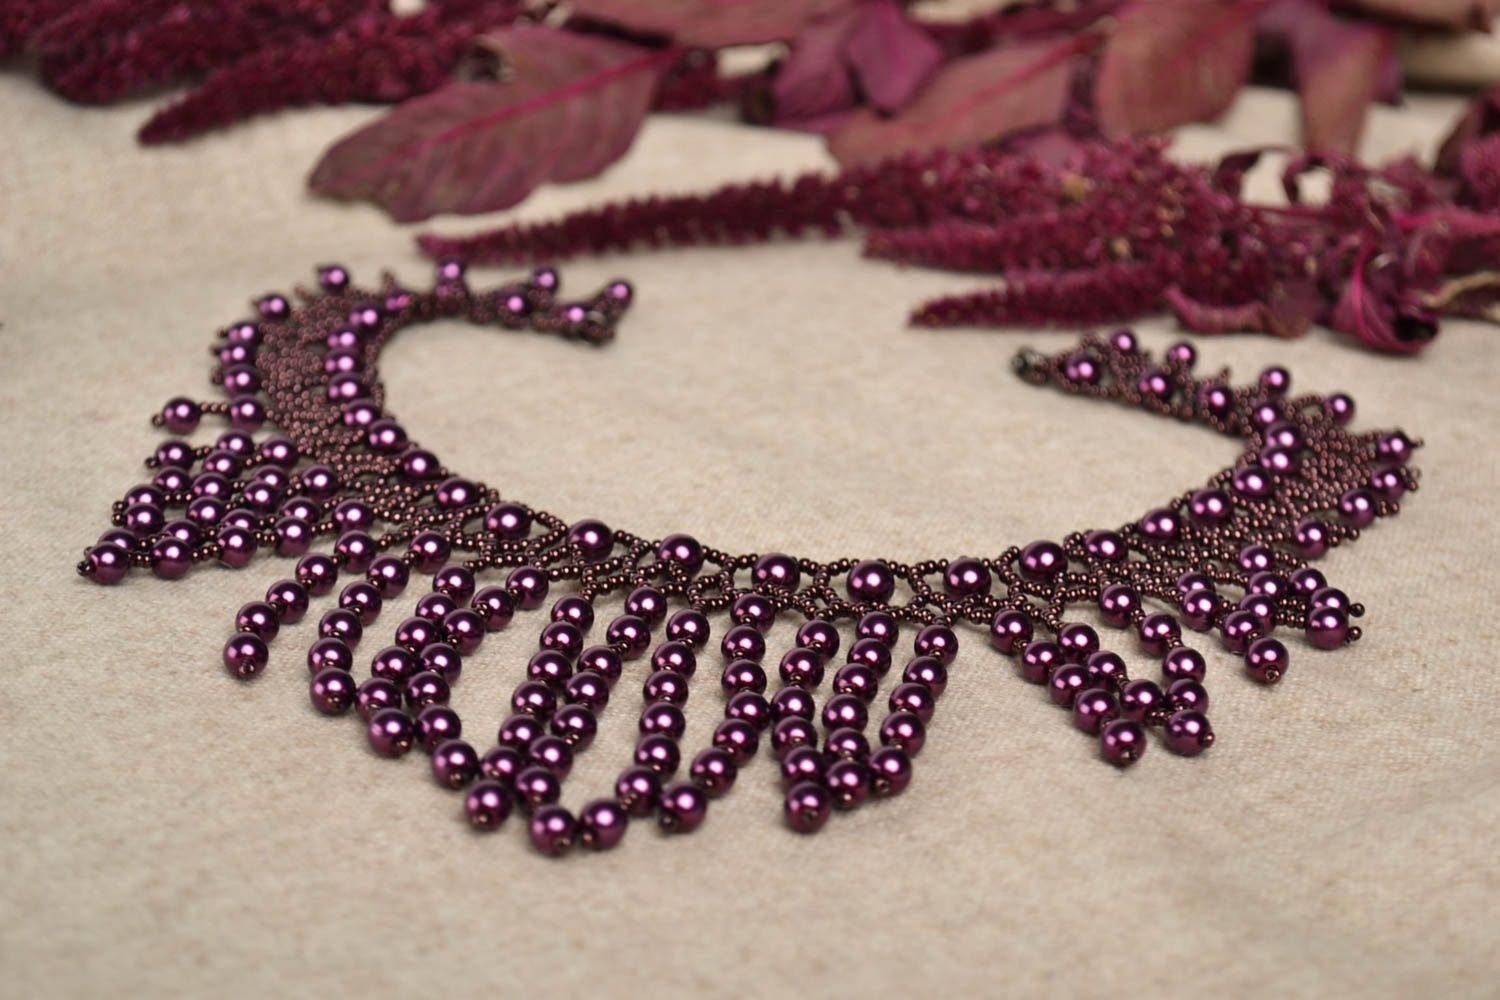 Handmade beaded necklace seed beads jewelry evening necklace handmade accessory photo 1